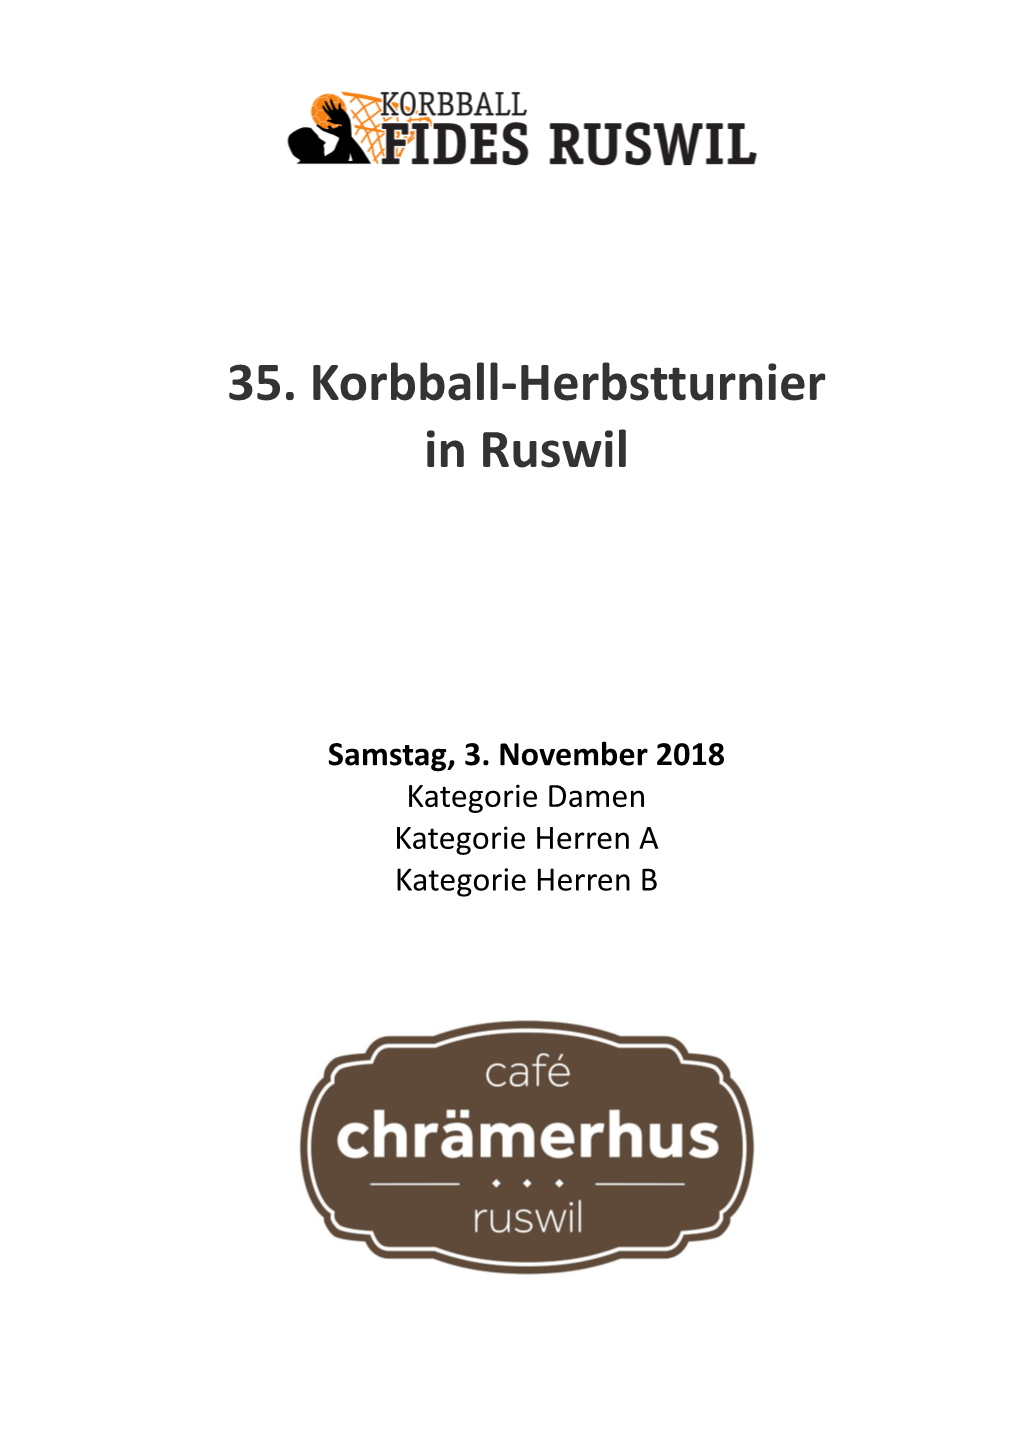 35. Korbball-Herbstturnier in Ruswil